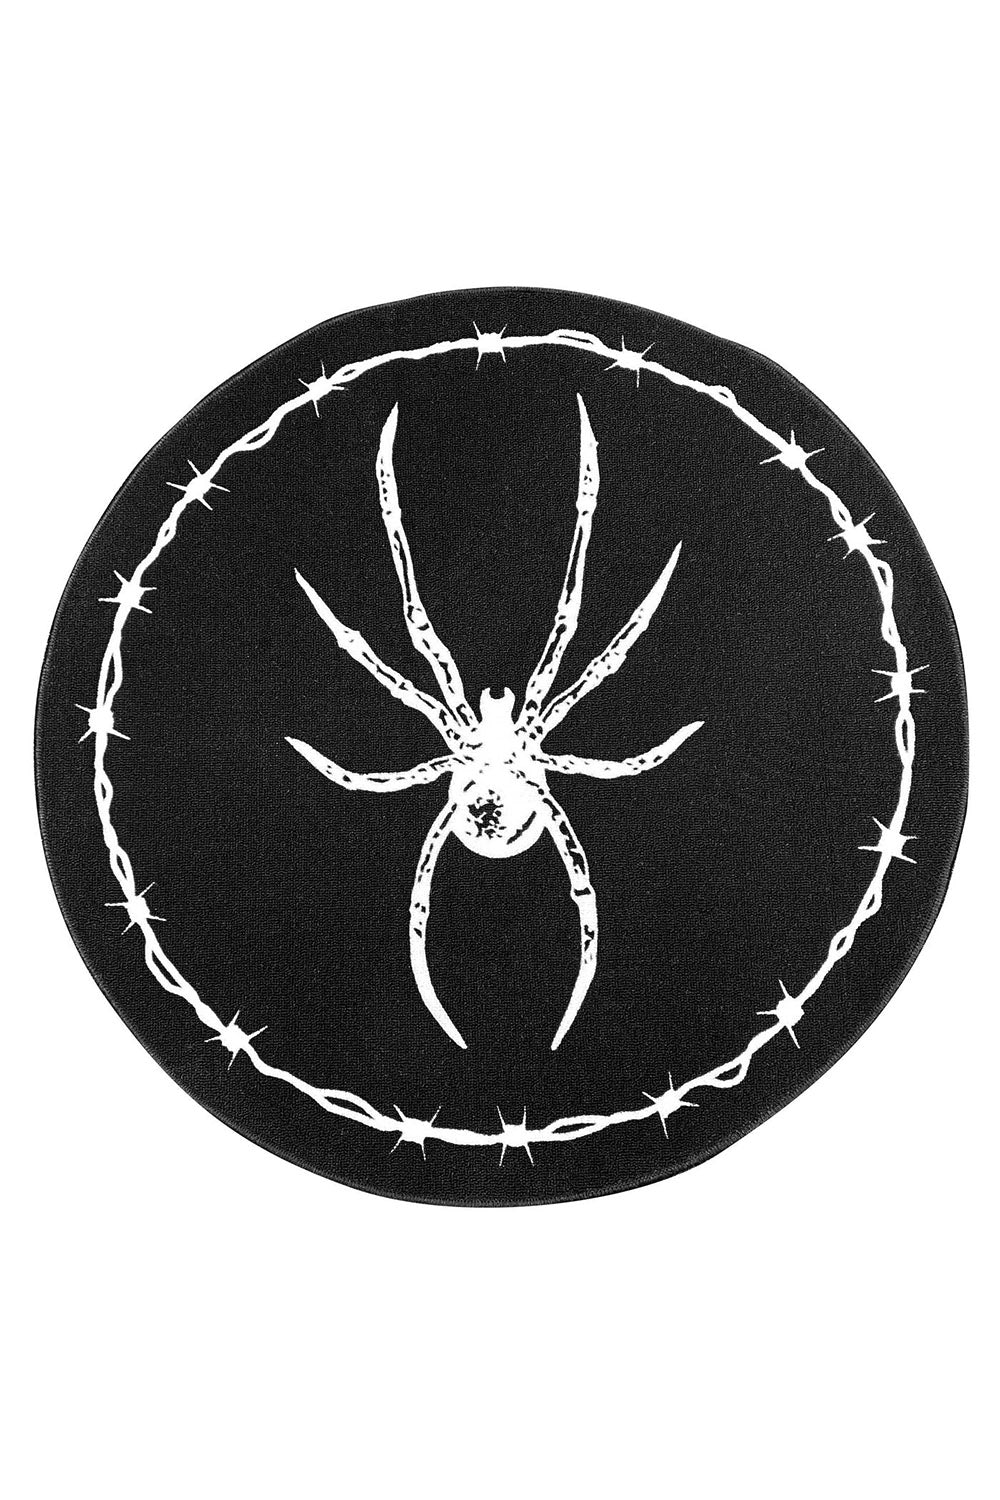 Barbed Wire Spider Rug